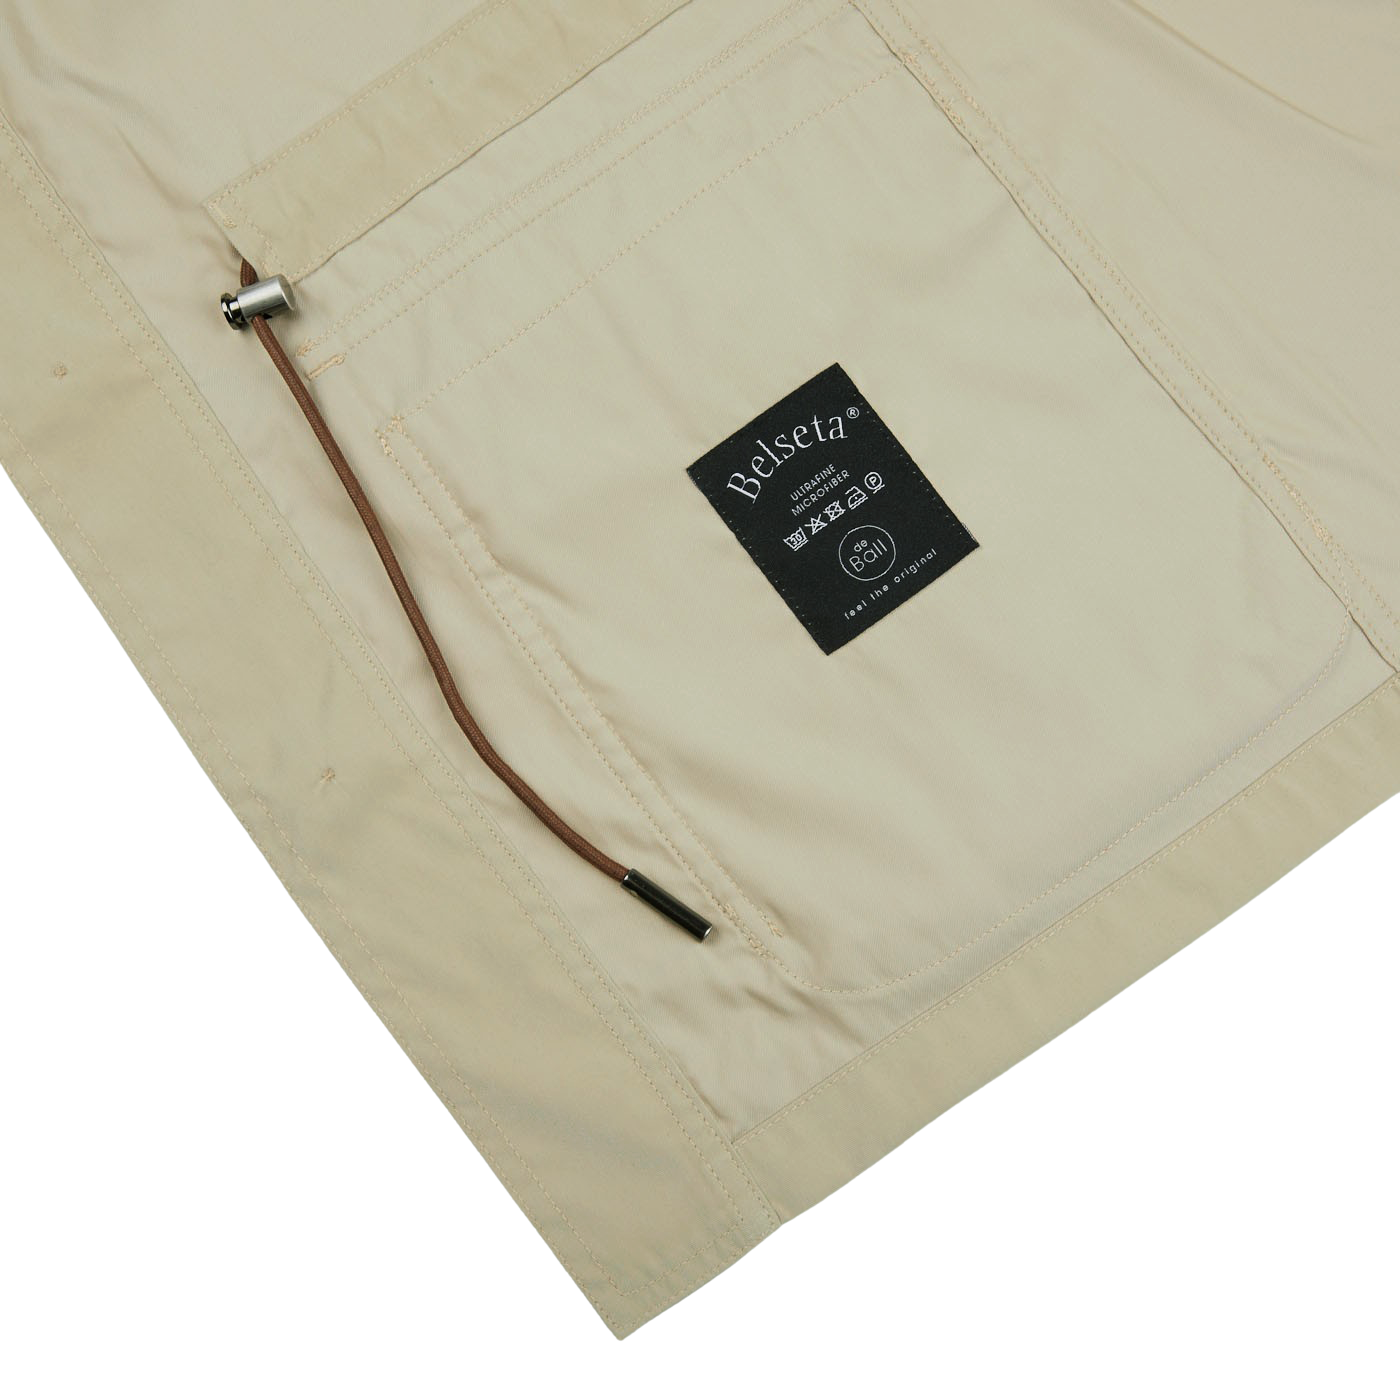 The Khaki Beige Ultrafine Microfiber Safari Jacket by Manto with a black label.